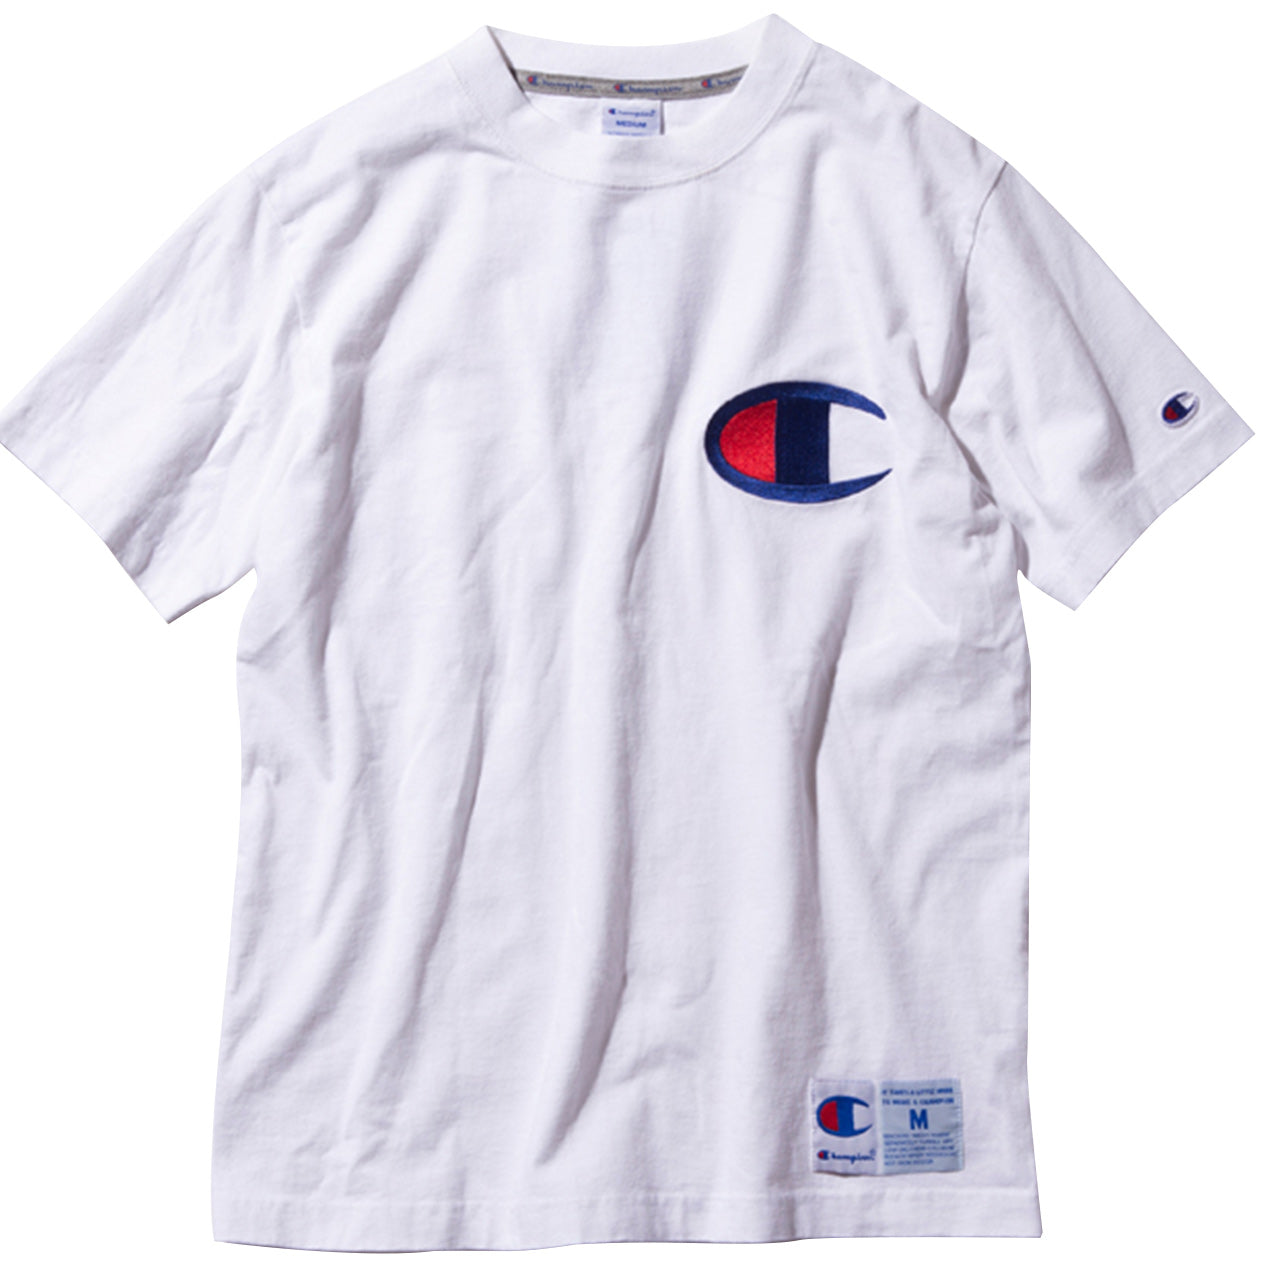 Champion Tシャツ メンズ 半袖 S～XL (男性 紳士 左胸刺繍 シャツ インナー チャンピオン 綿100%) (在庫限り)